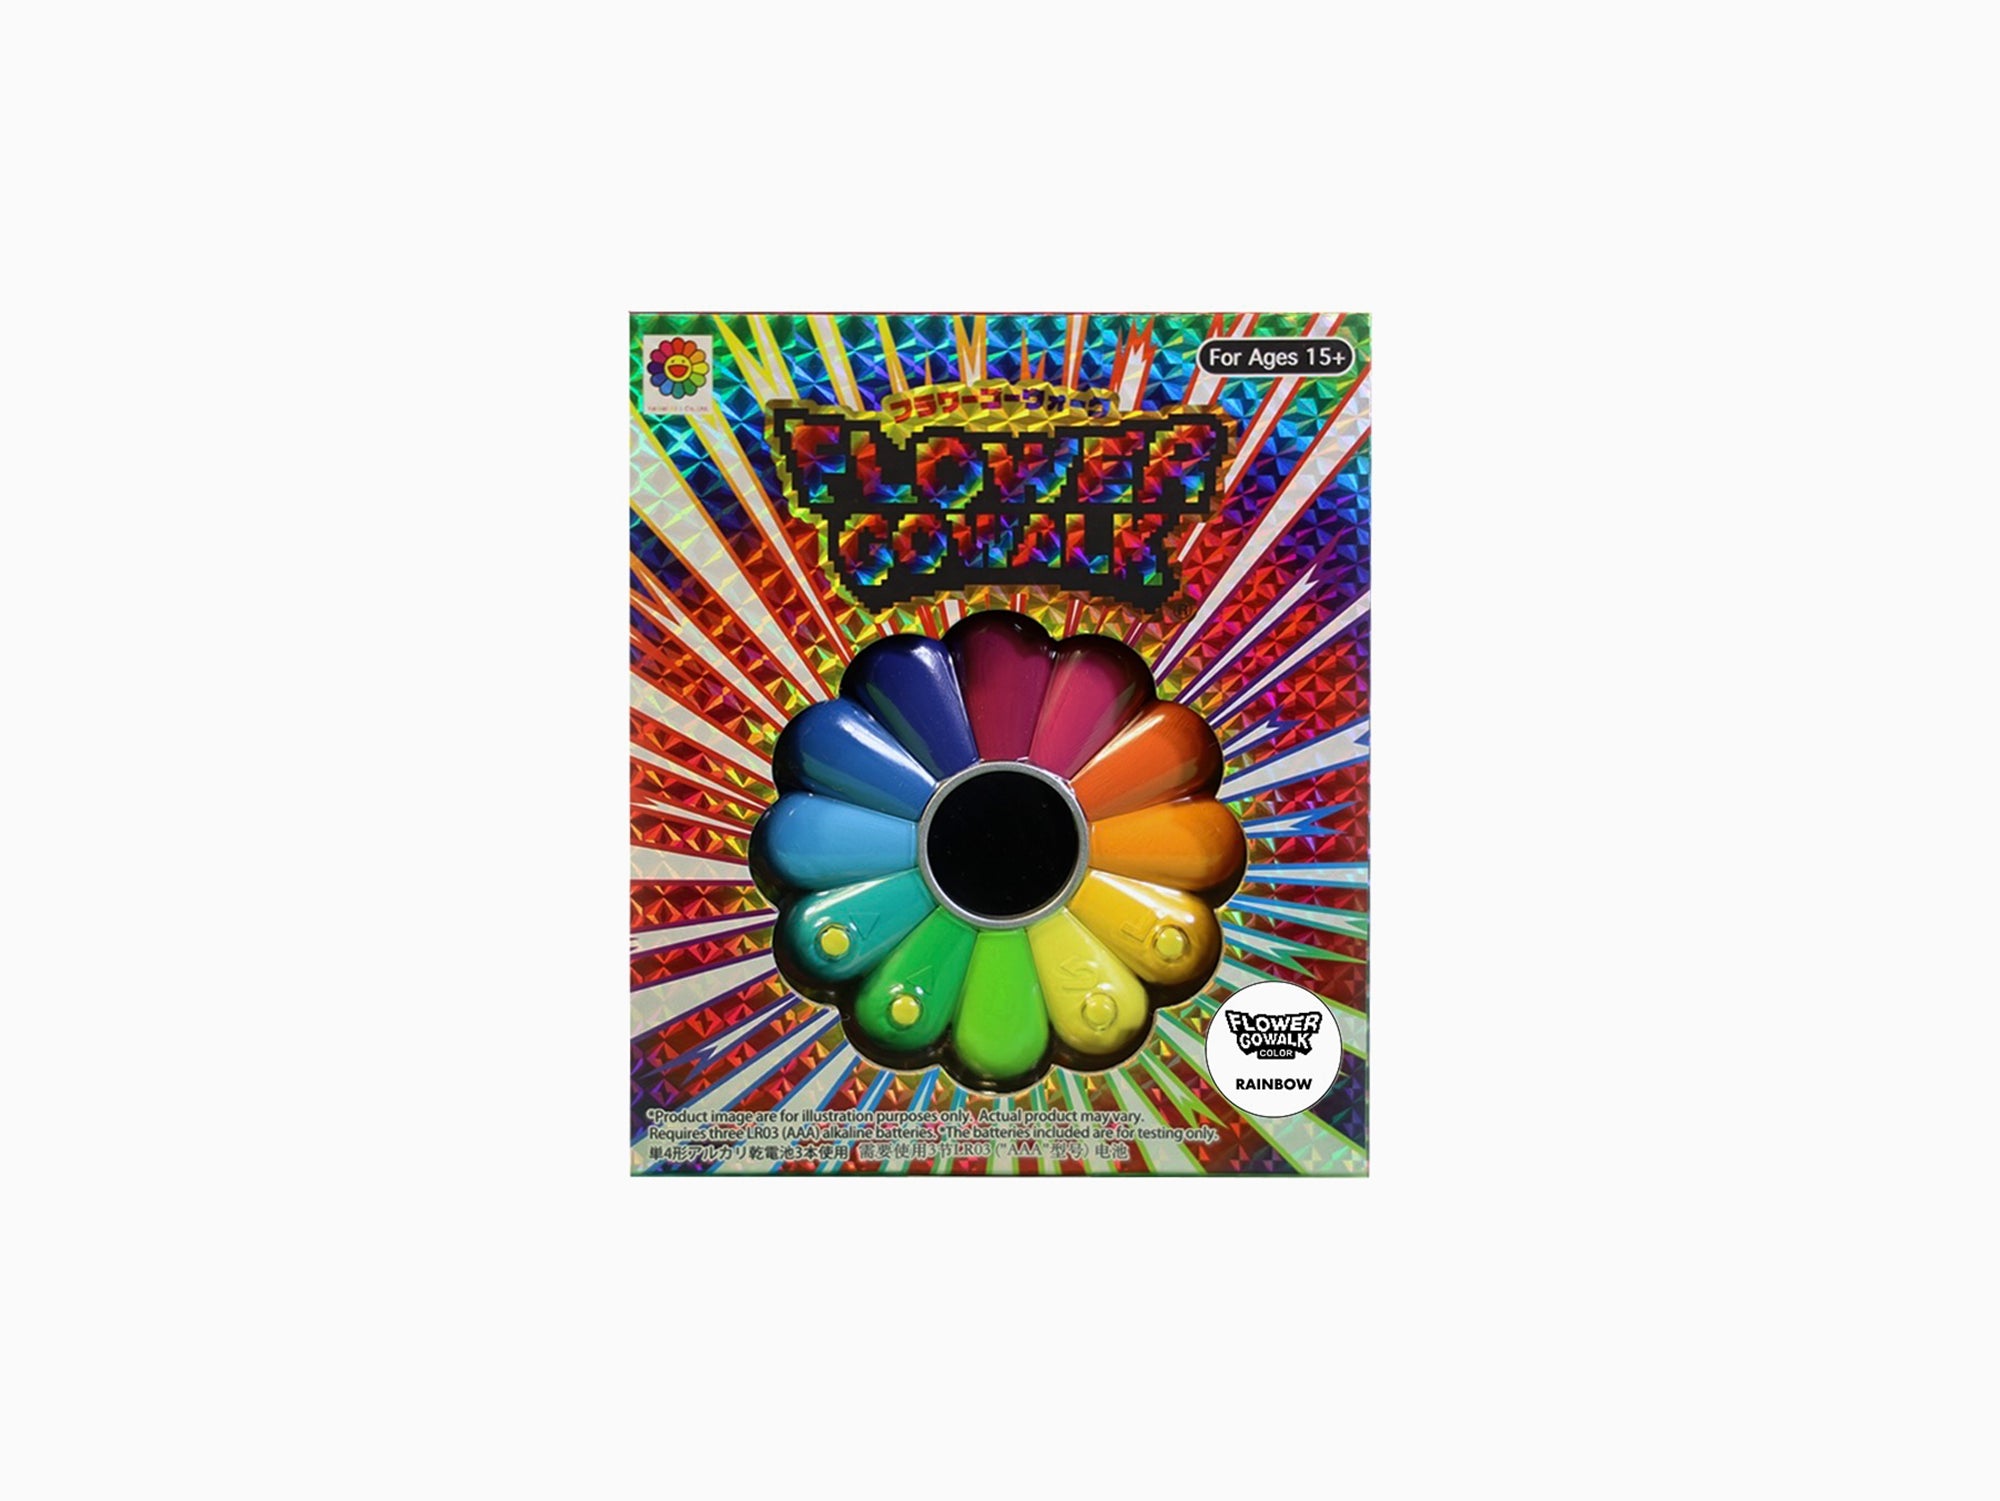 Takashi Murakami - FLOWER GO WALK COLOR / Rainbow